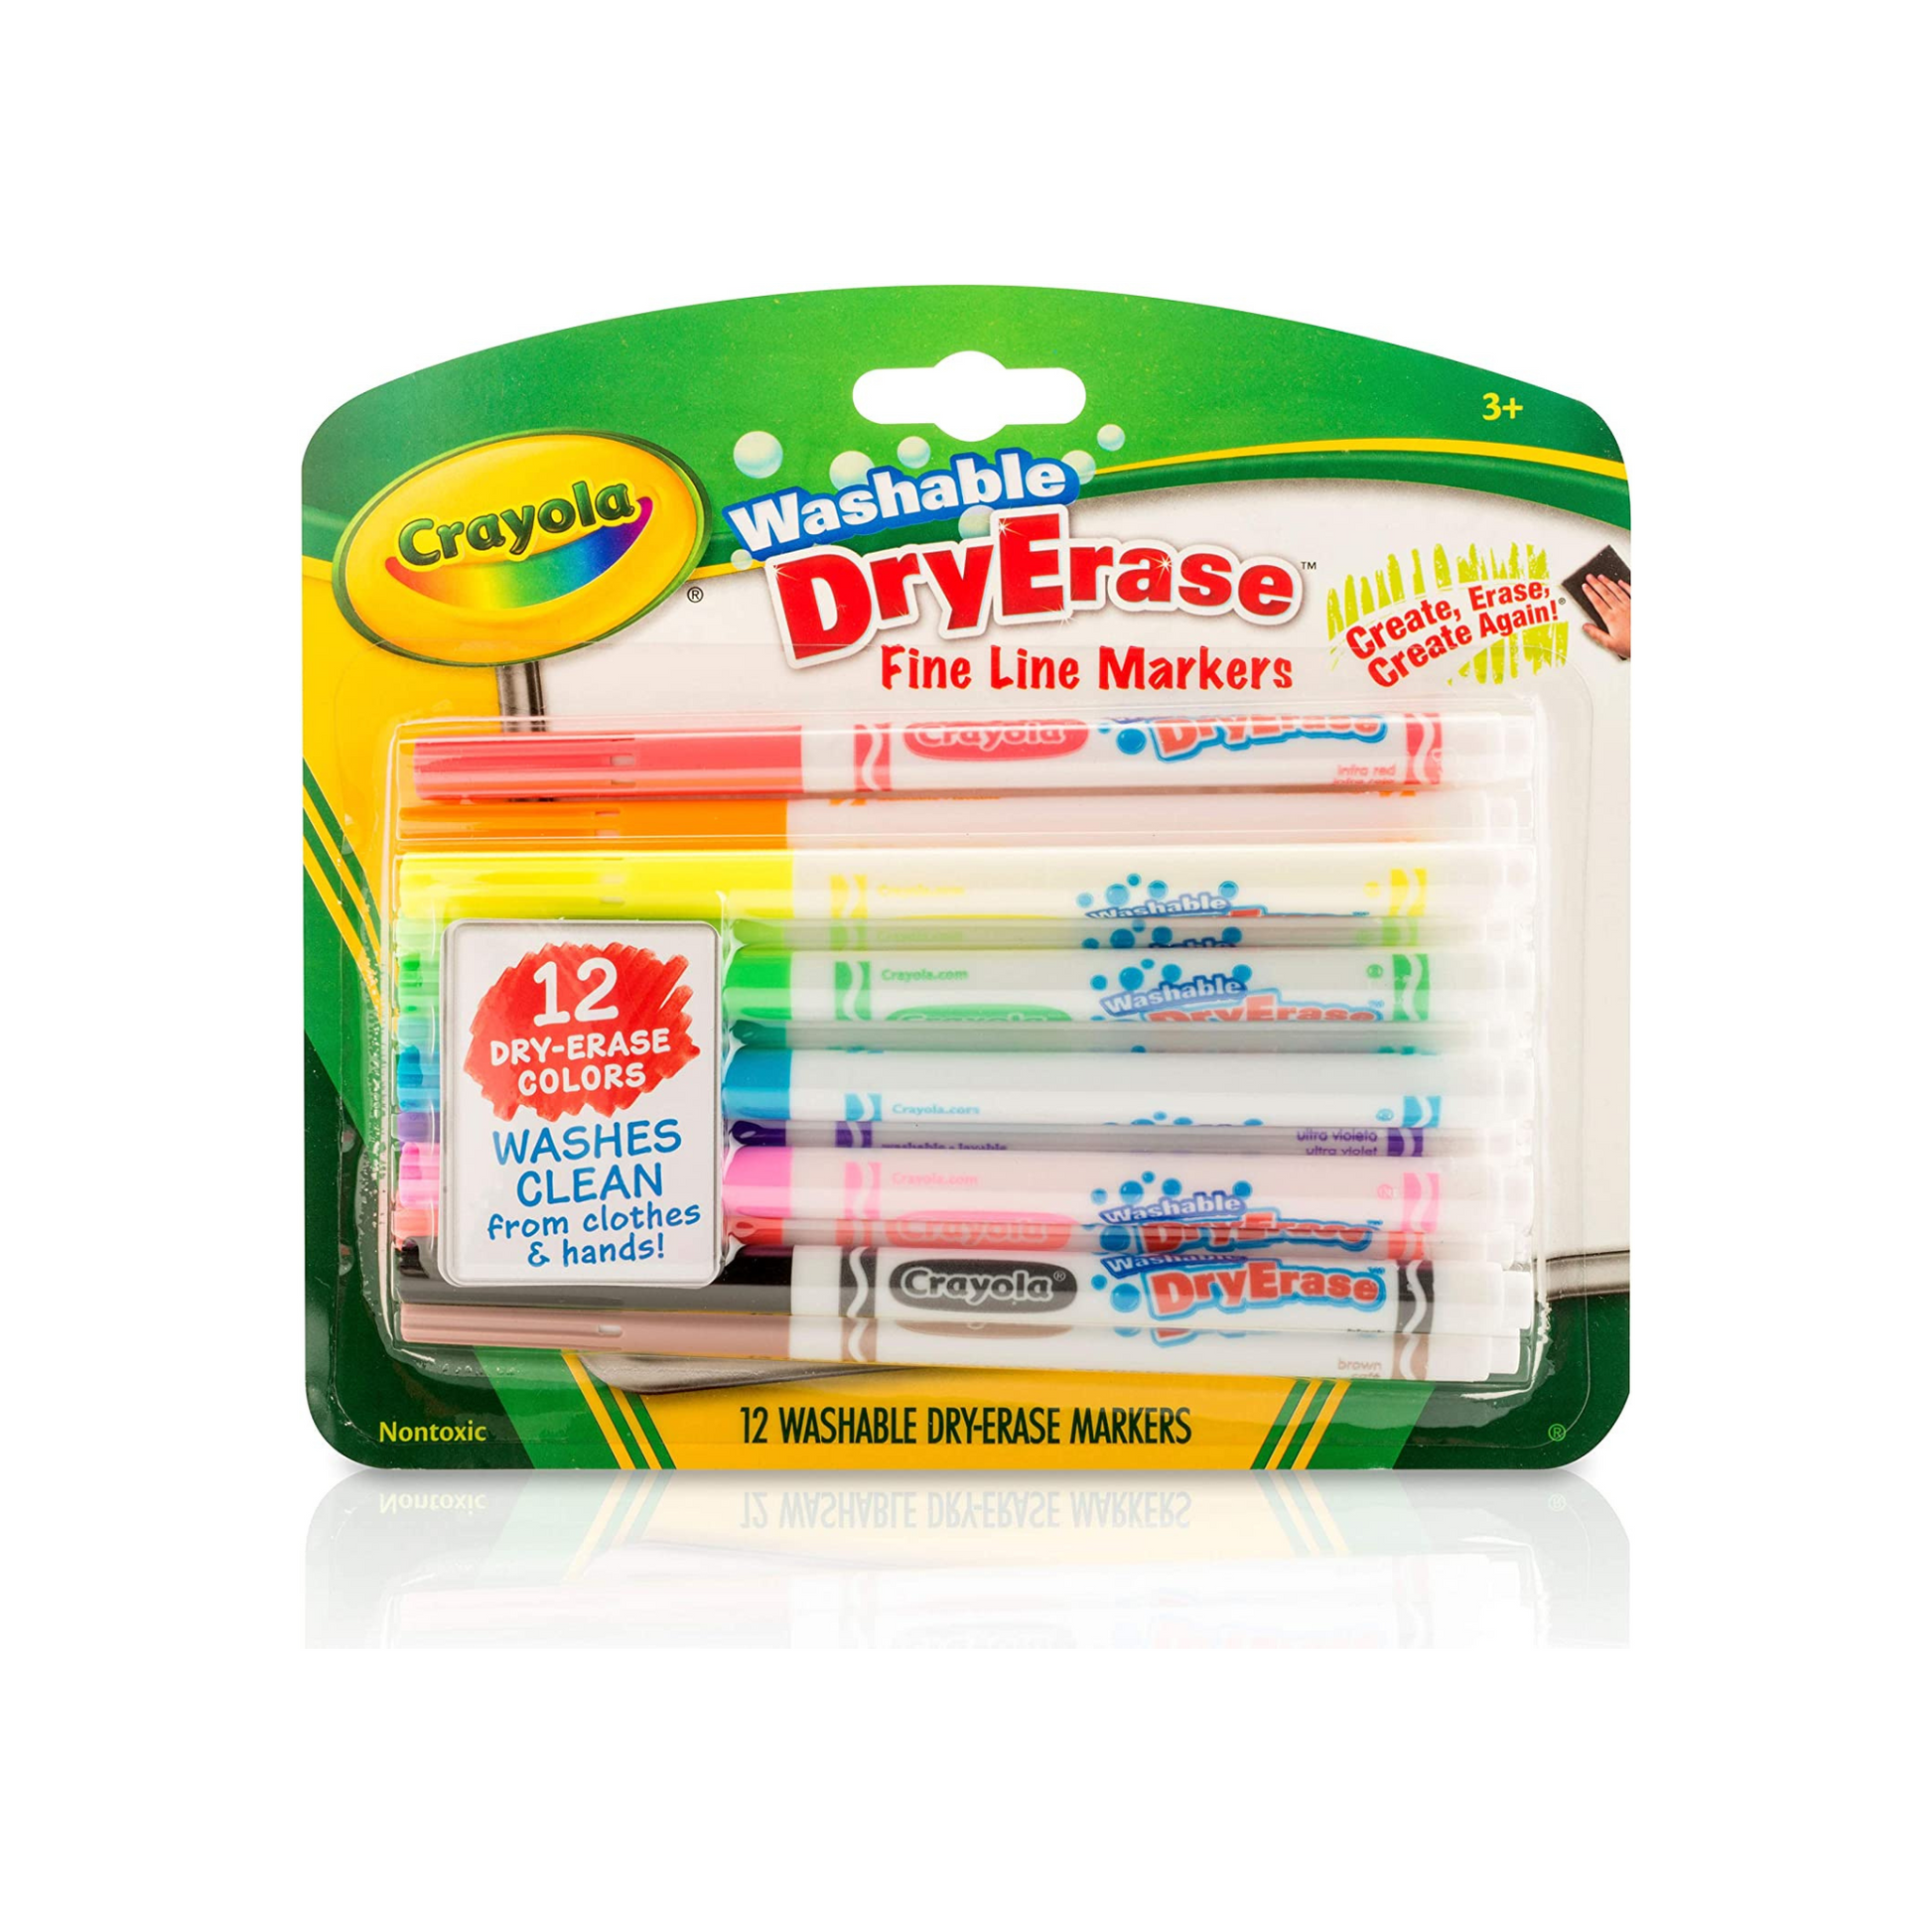  Totebook Dry Erase Kids Activity Book with Crayola